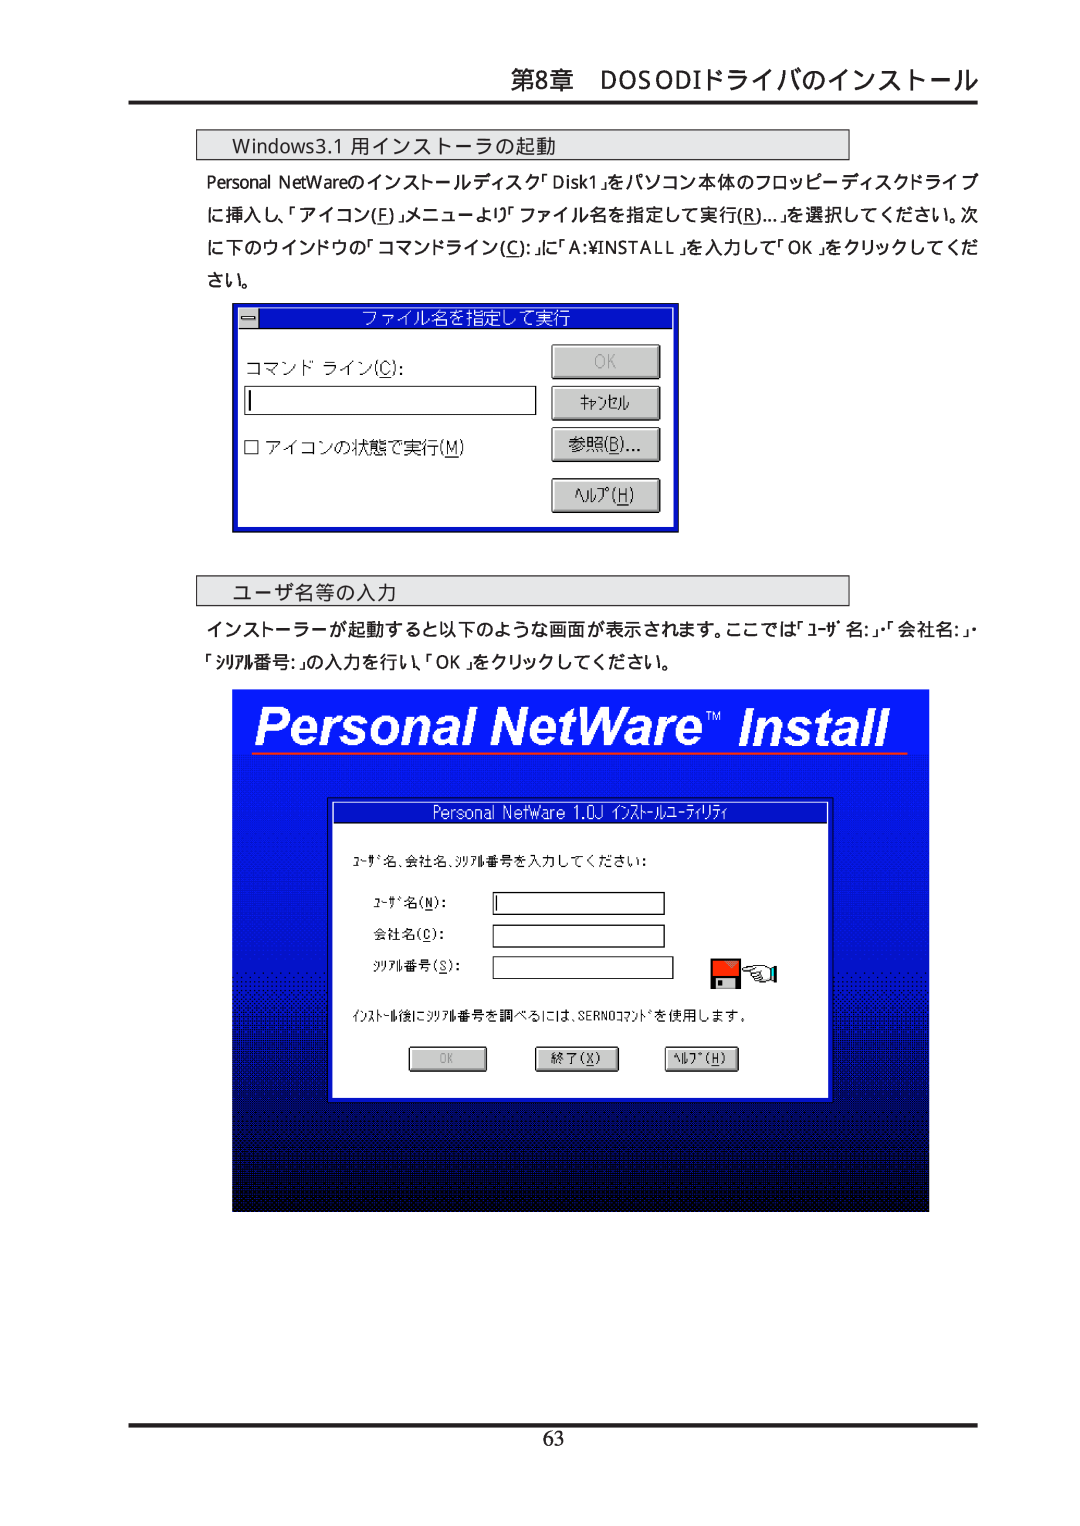 Ratoc Systems REX-R280 manual 第8章 DOSODIドライバのインストール, Windows3.1 用インストーラの起動, ユーザ名等の入力 